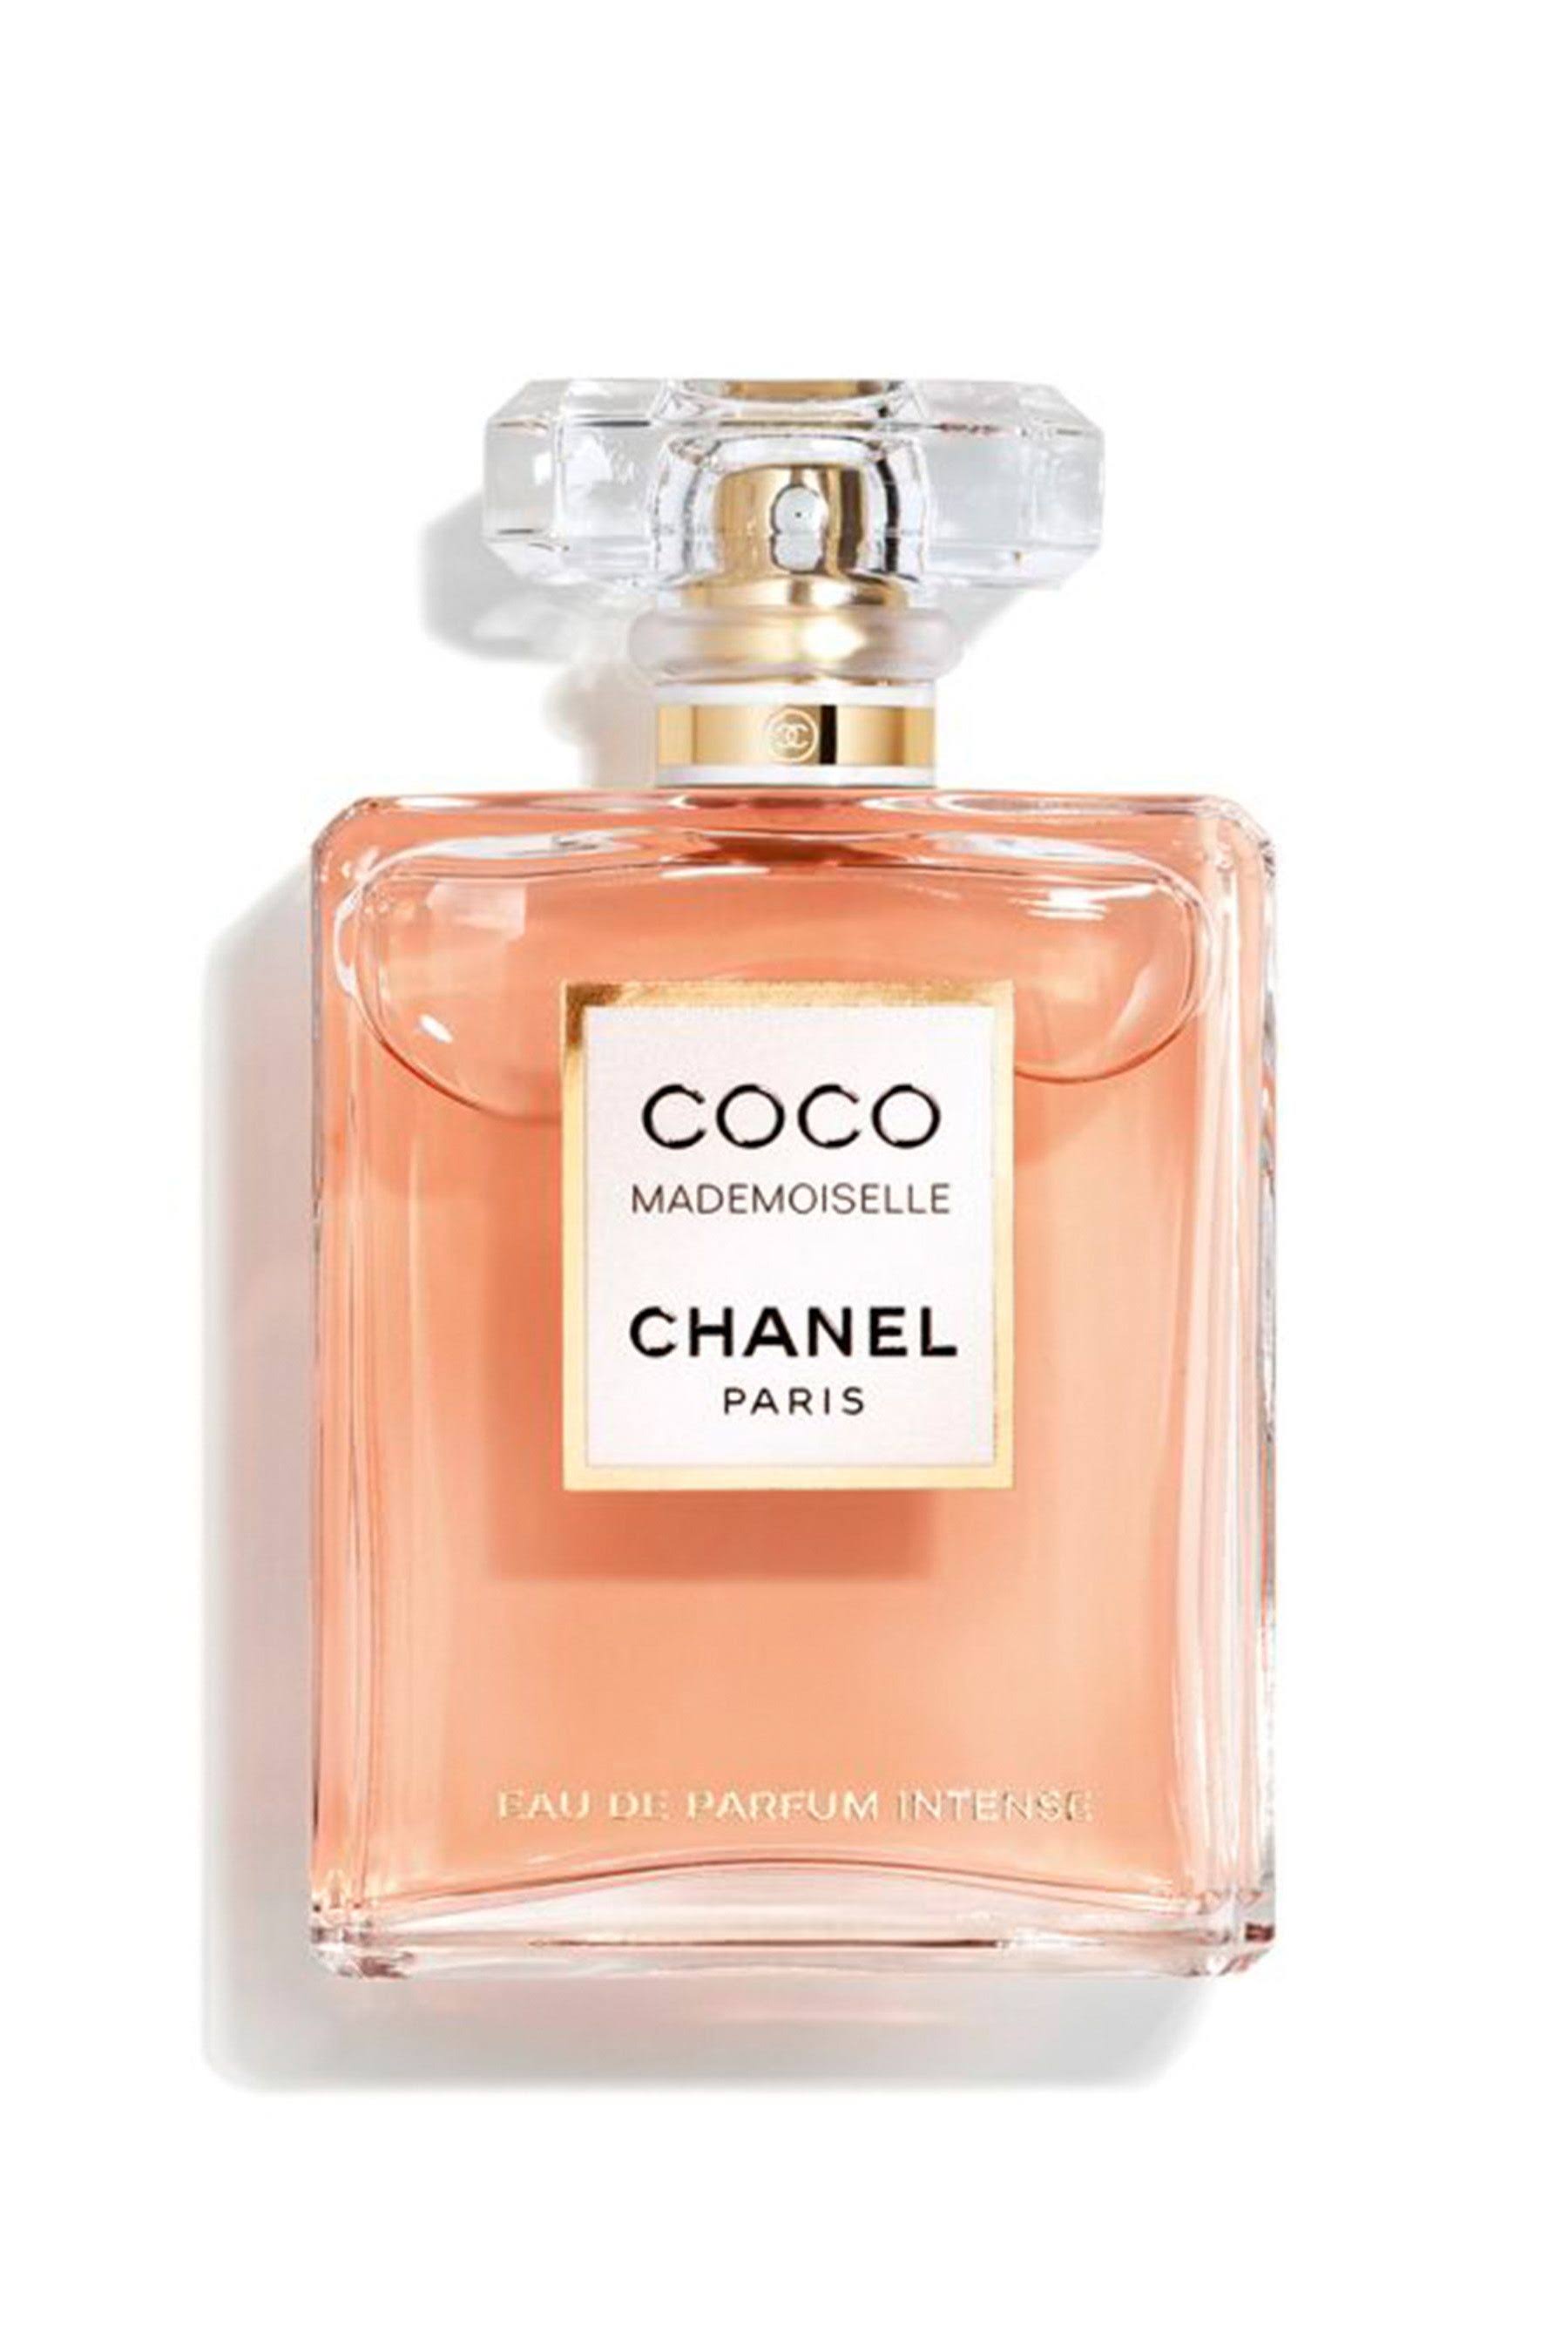 Chanel Coco Mademoiselle Eau de Parfum Intense Spray 50 ml